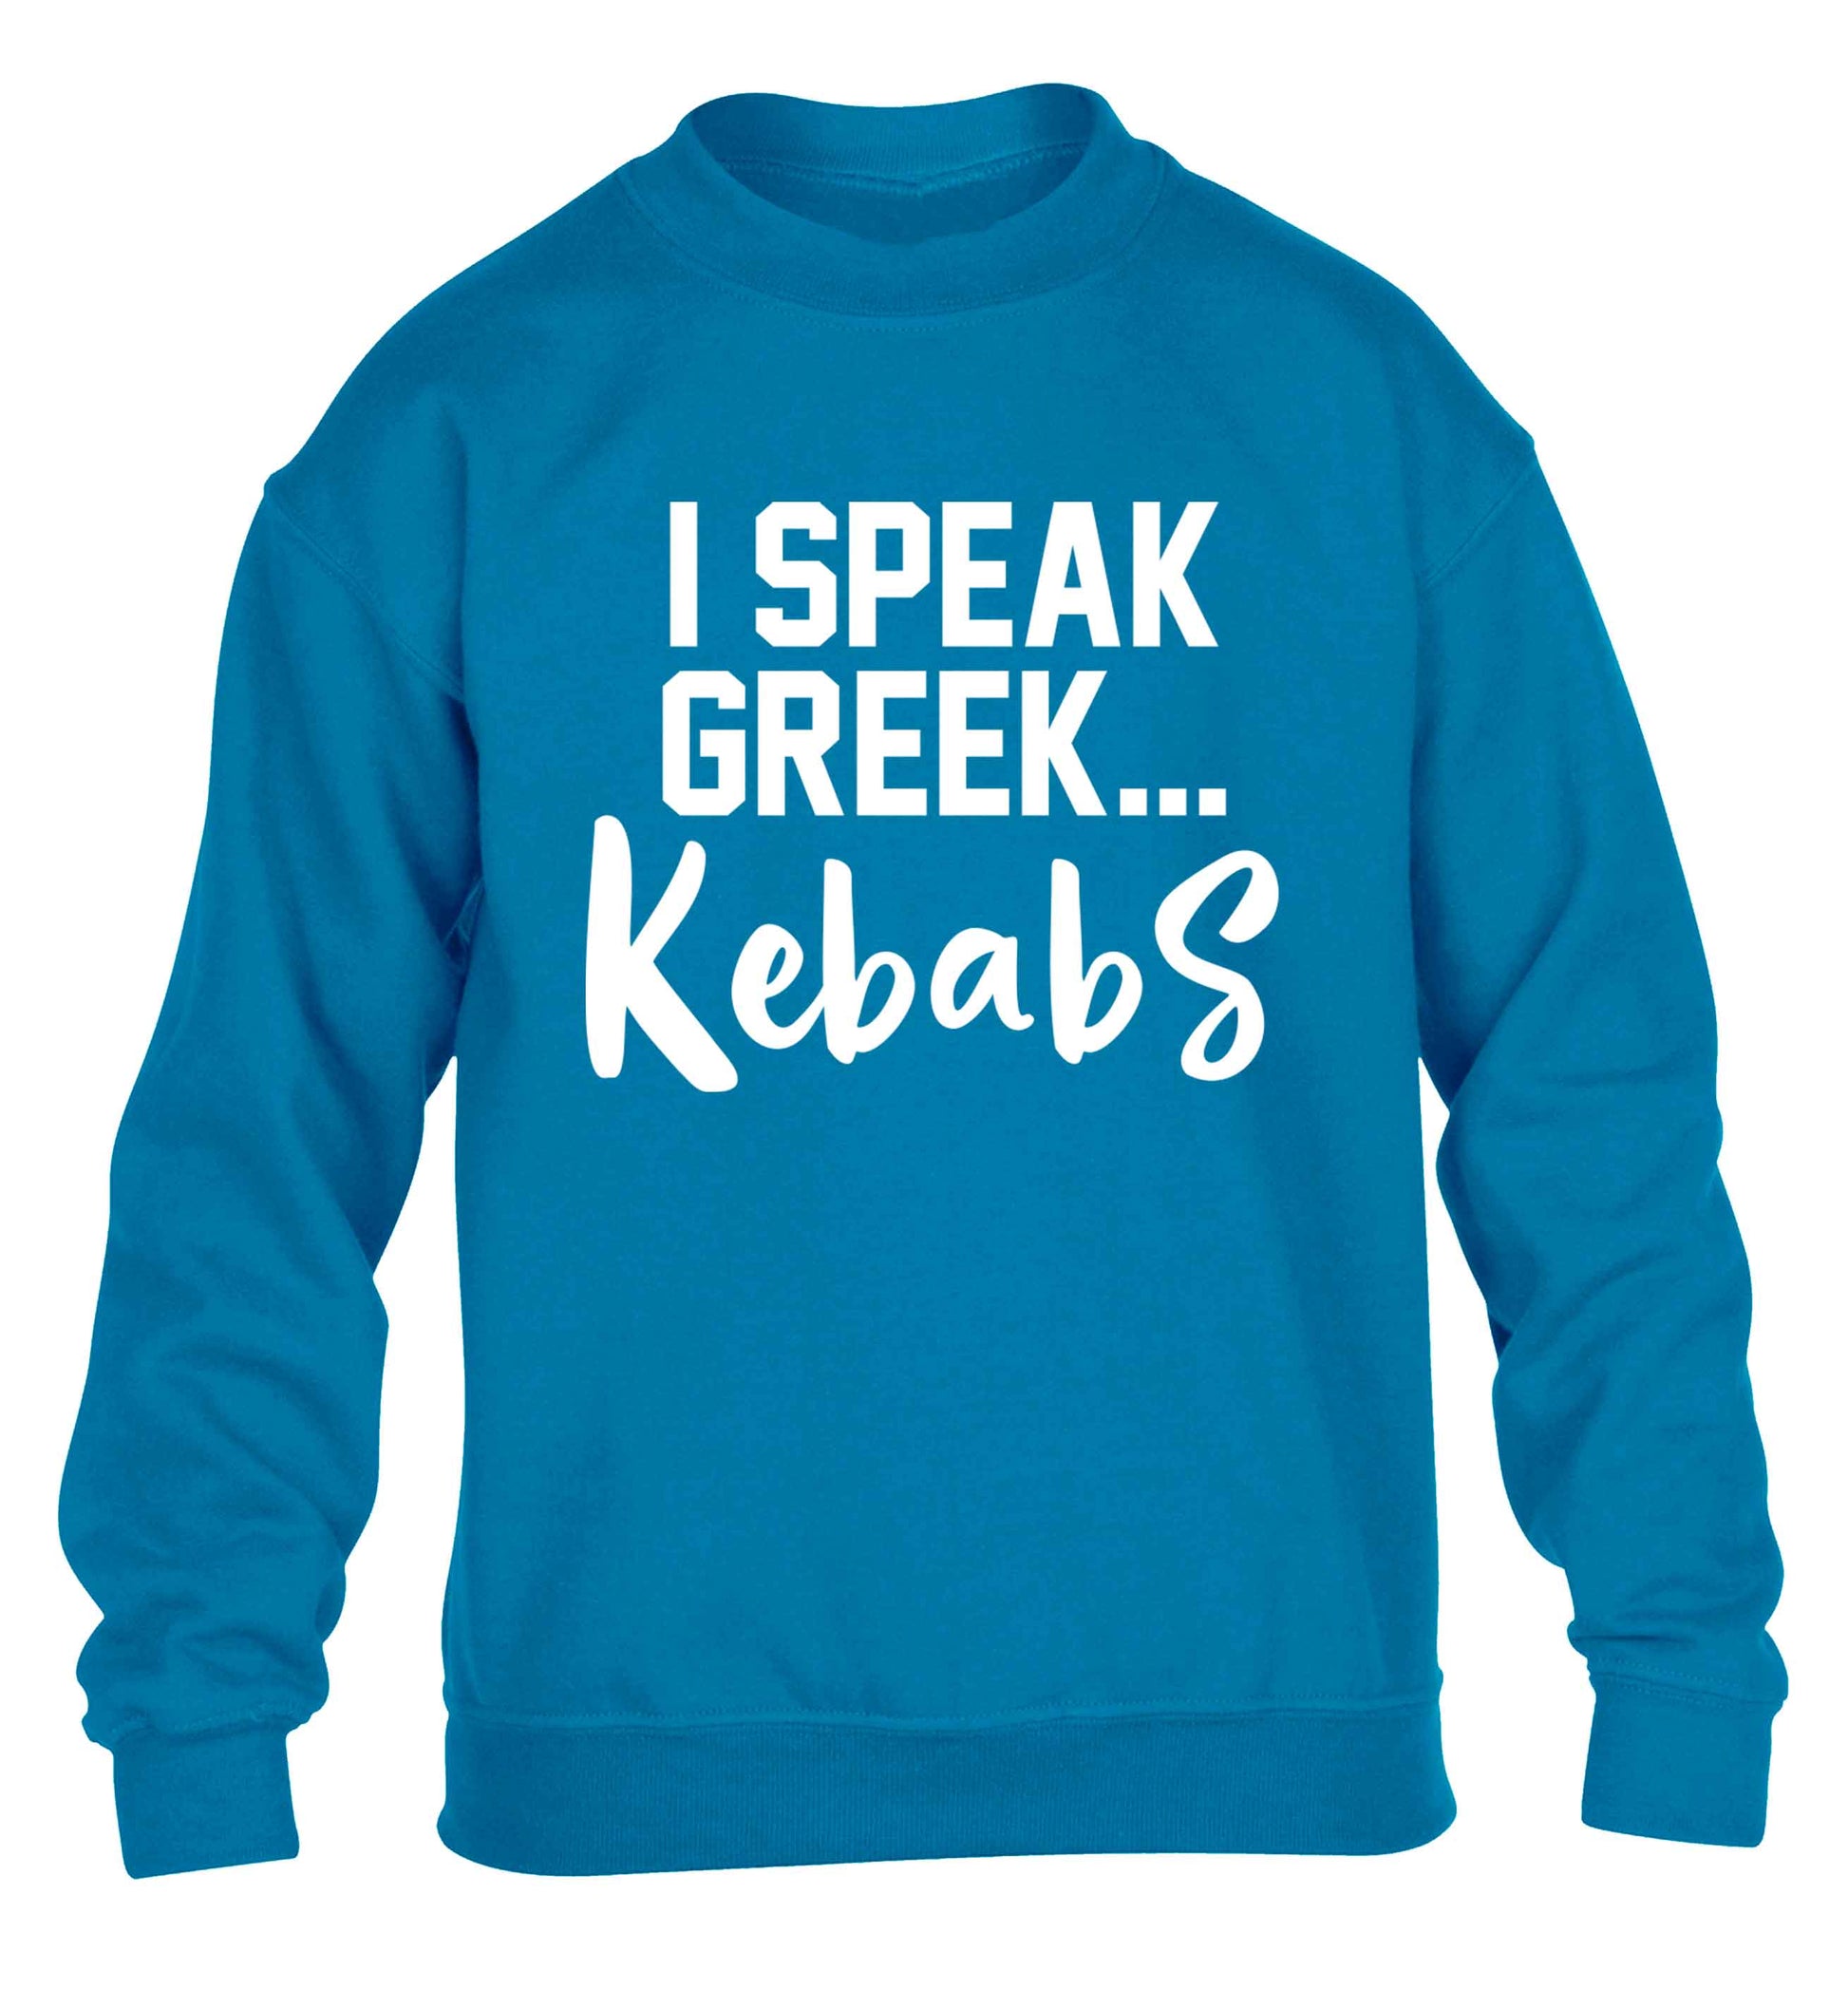 I speak Greek...kebabs children's blue sweater 12-13 Years